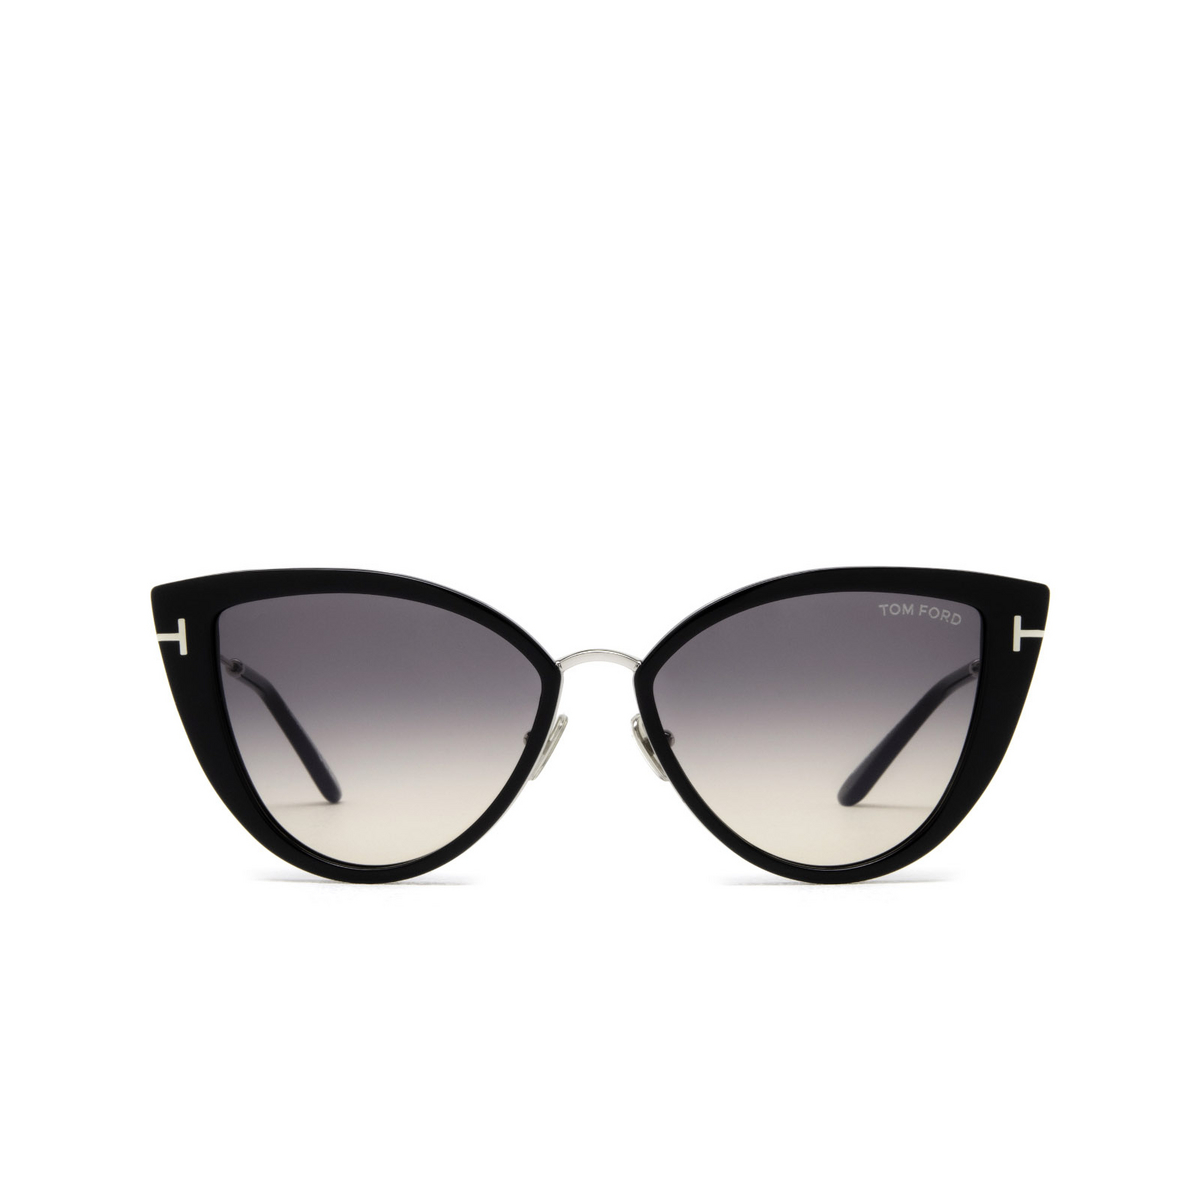 Tom Ford ANJELICA-02 Sunglasses 01B Black - front view